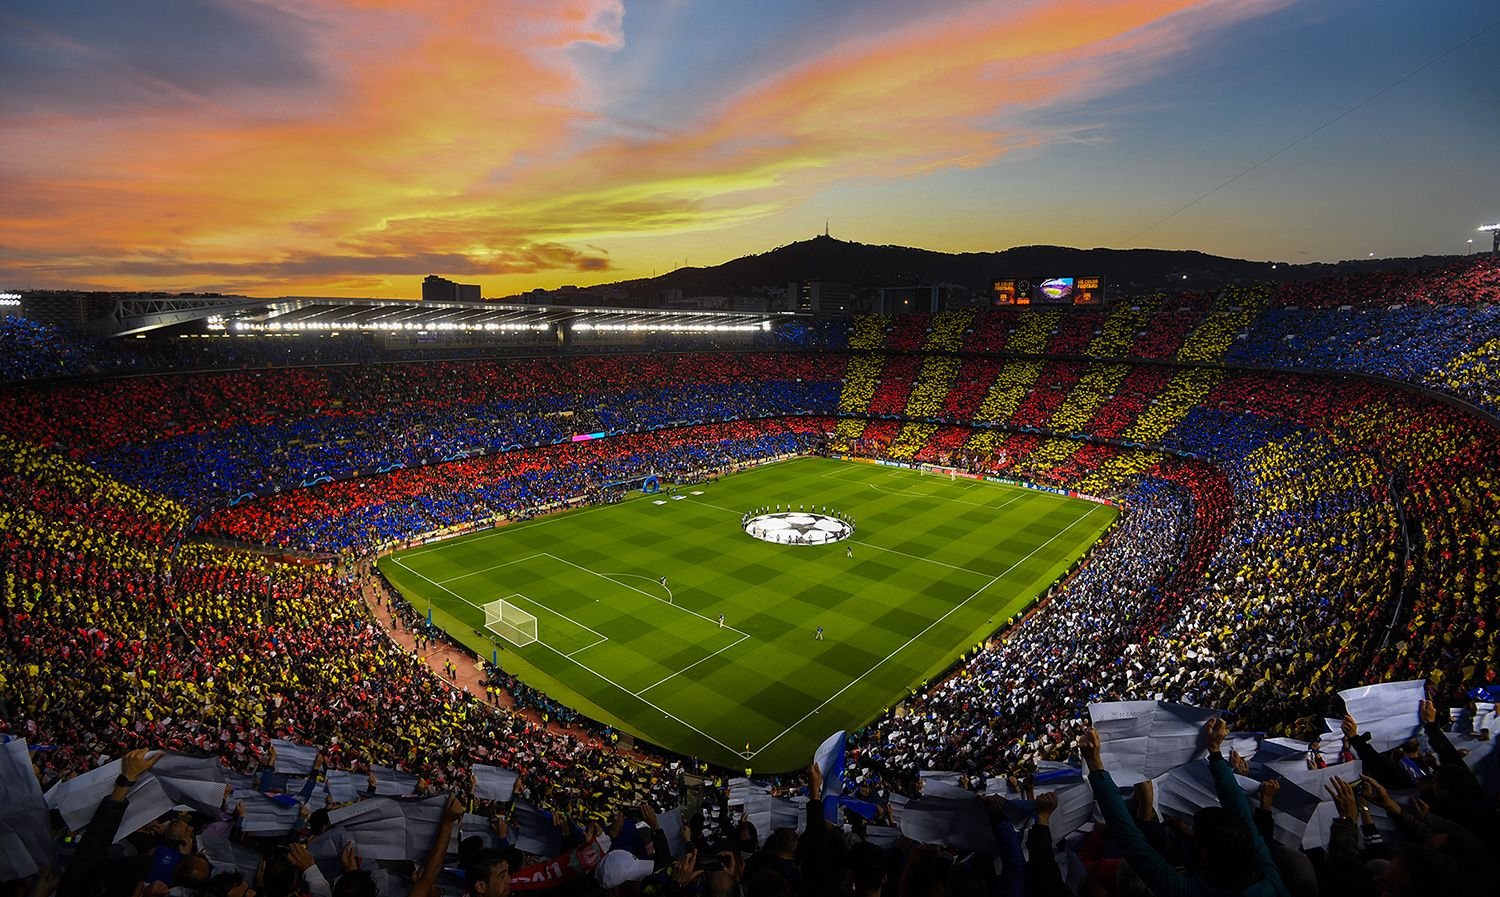 Camp Nou is the biggest football stadium in Spain